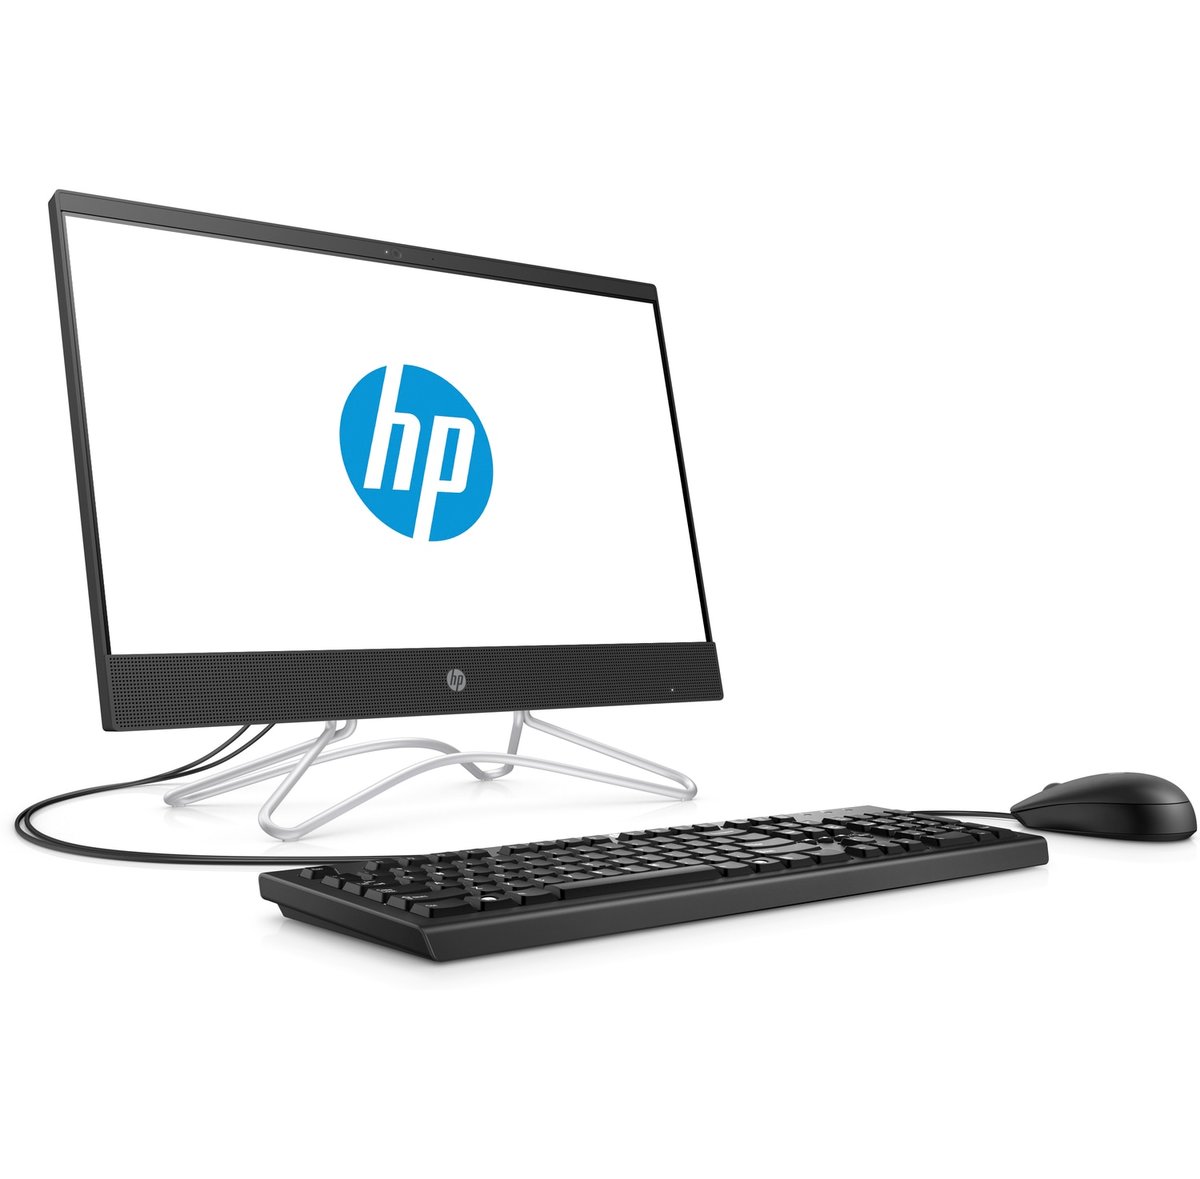 HP 200 G3 All-in-One PC Core i5-8250U, Memory 4GB, Storage 1TB, UHD Graphics 620, 21.5